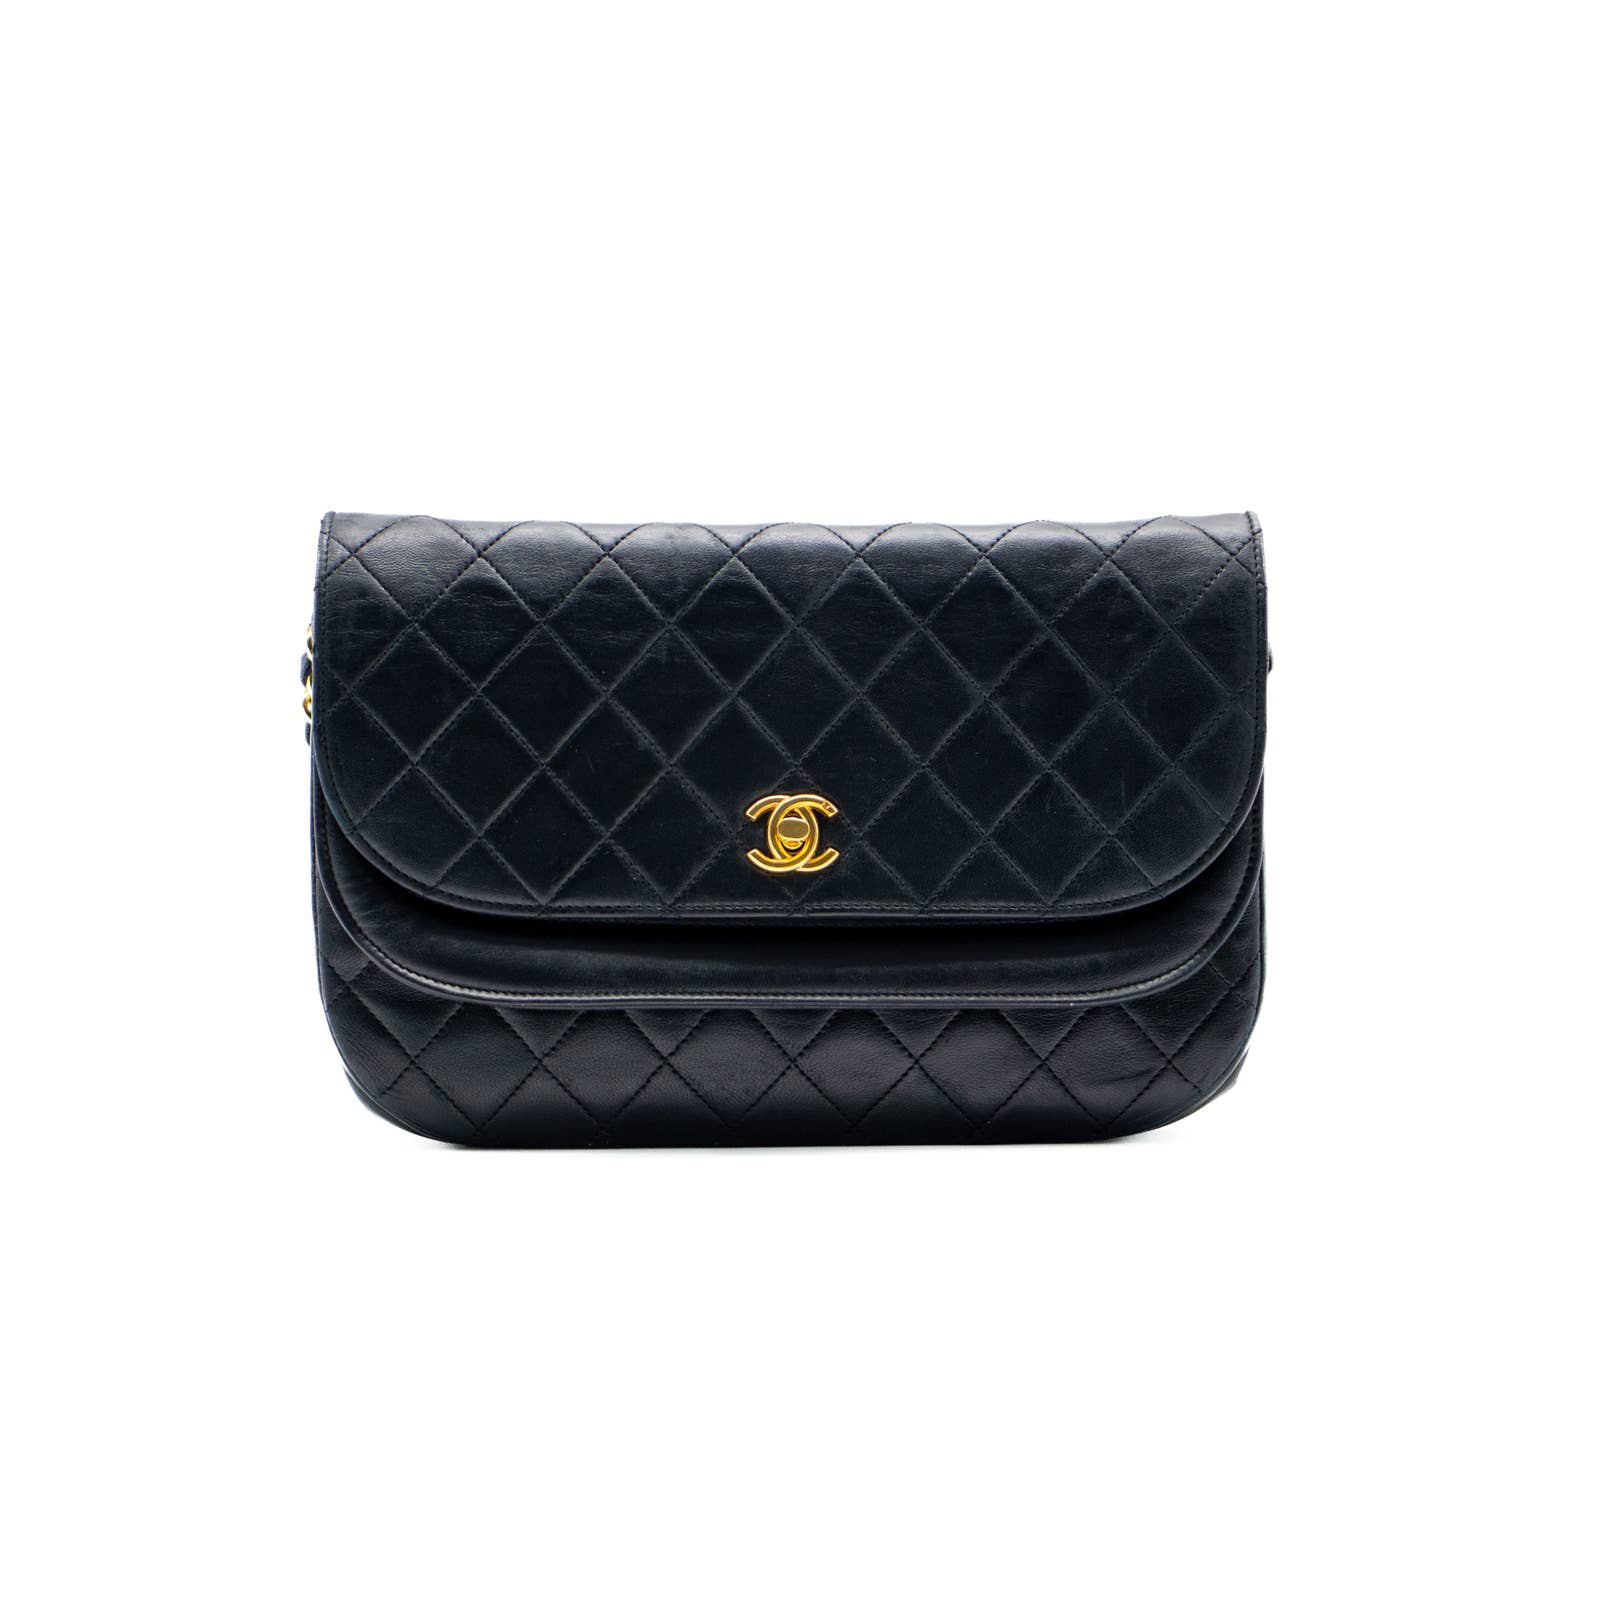 Chanel Quilted Leather Halfmoon Handbag